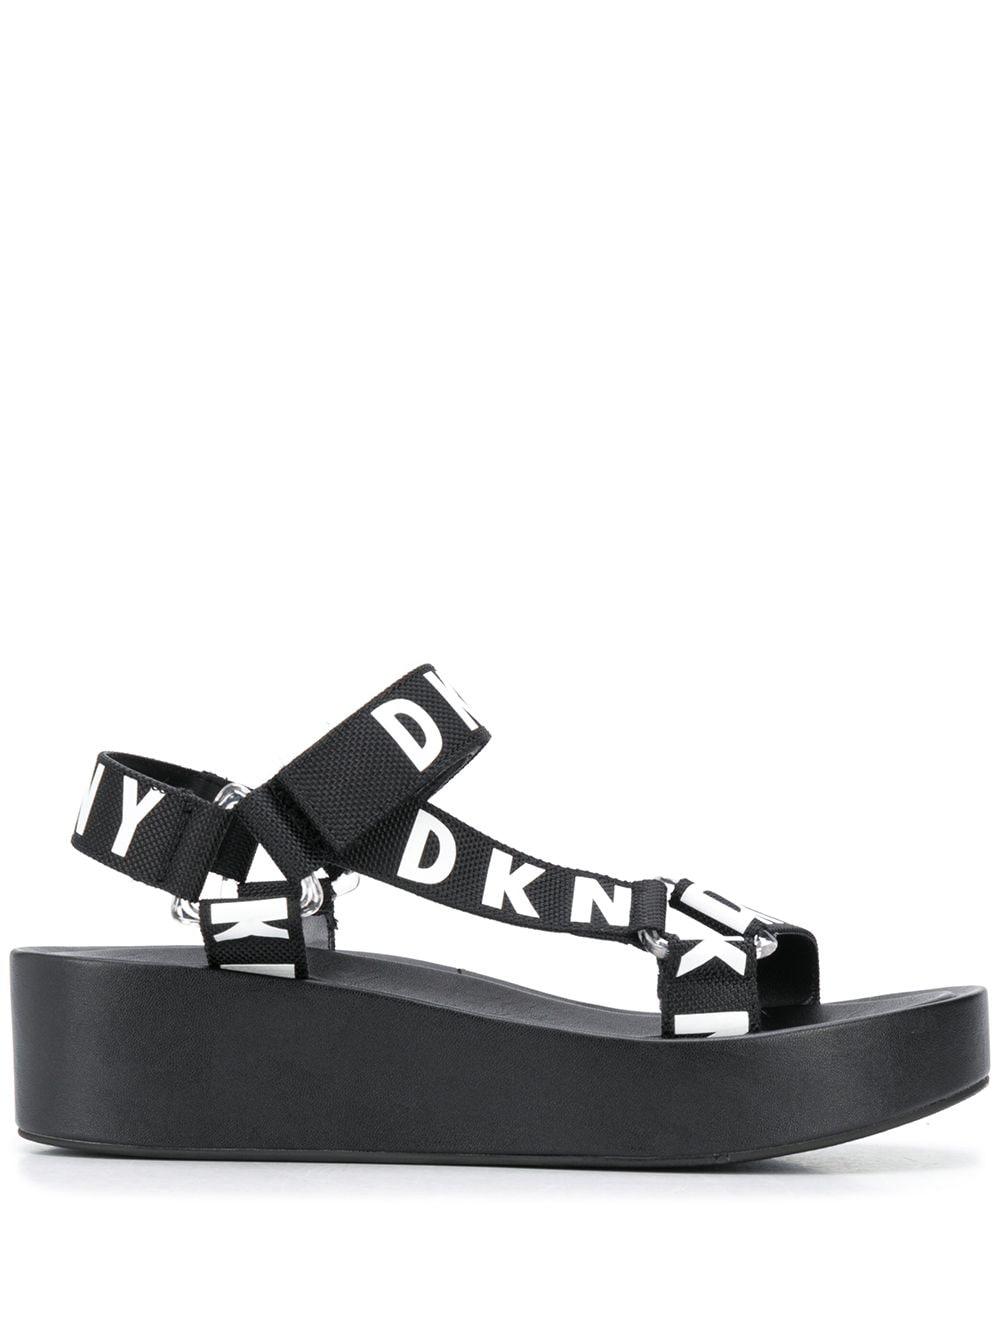 DKNY Logo Platform Sandals in Black | Lyst